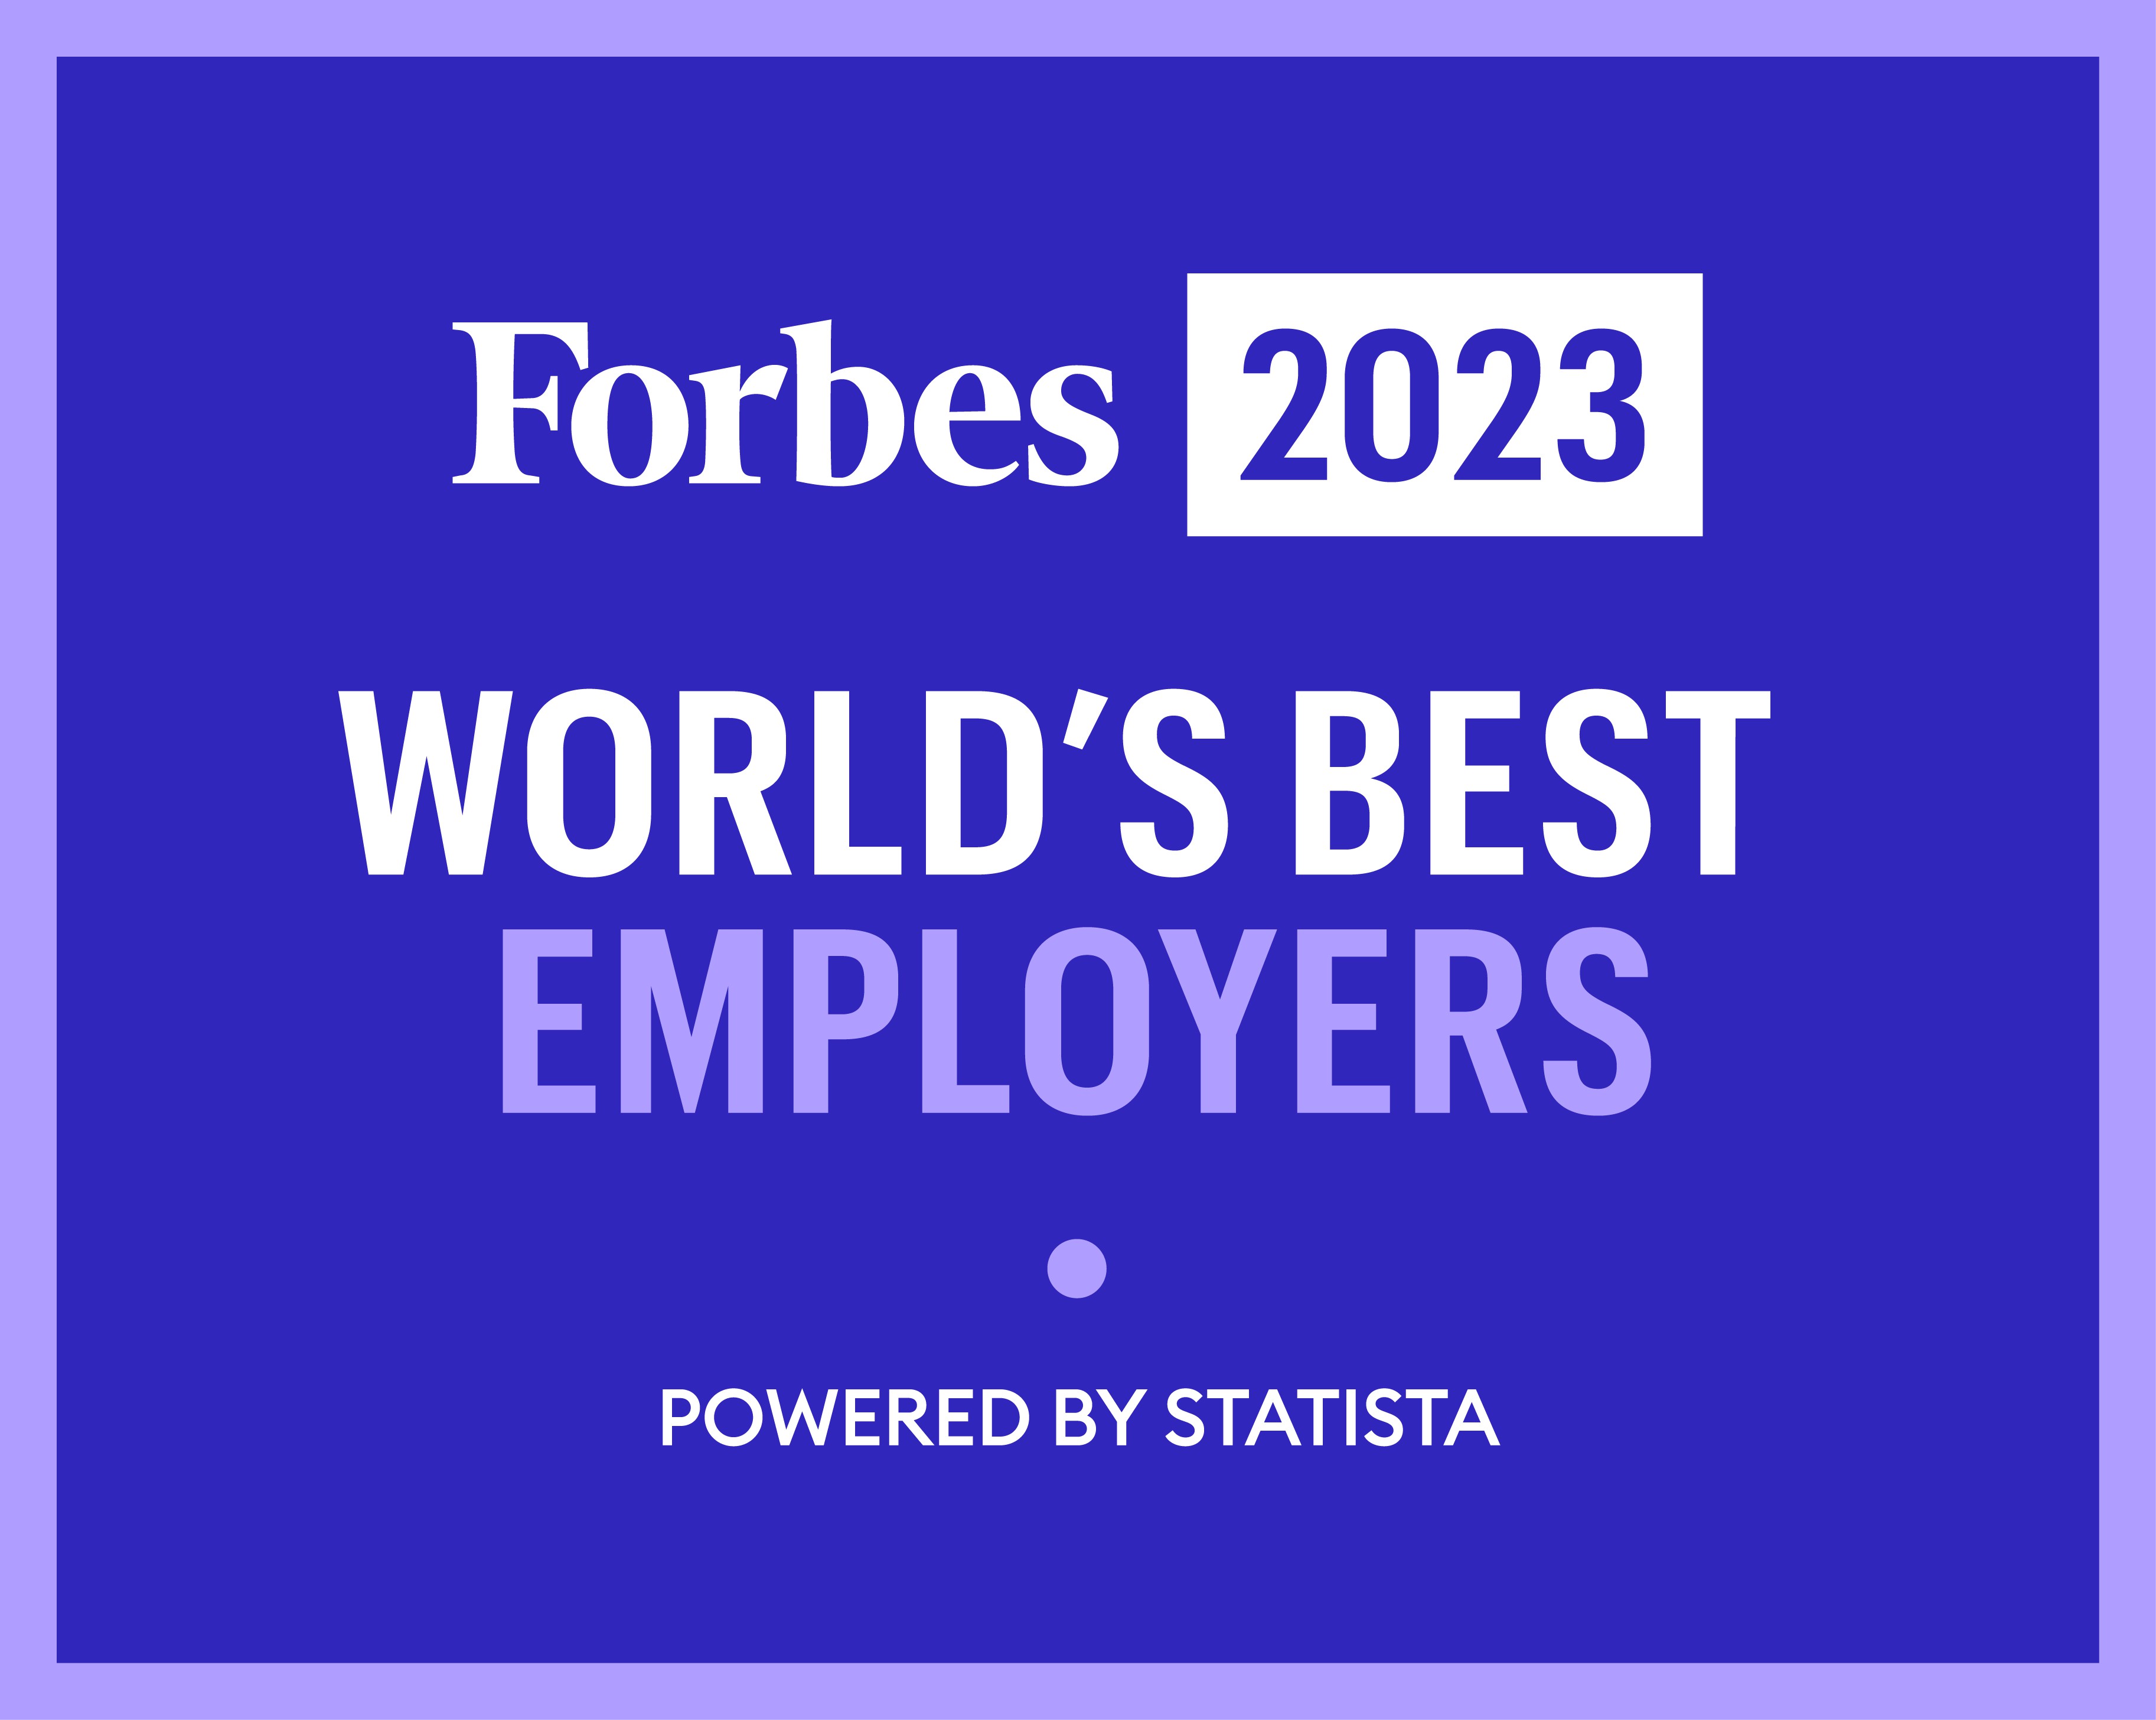 Award: Worlds Best Employers